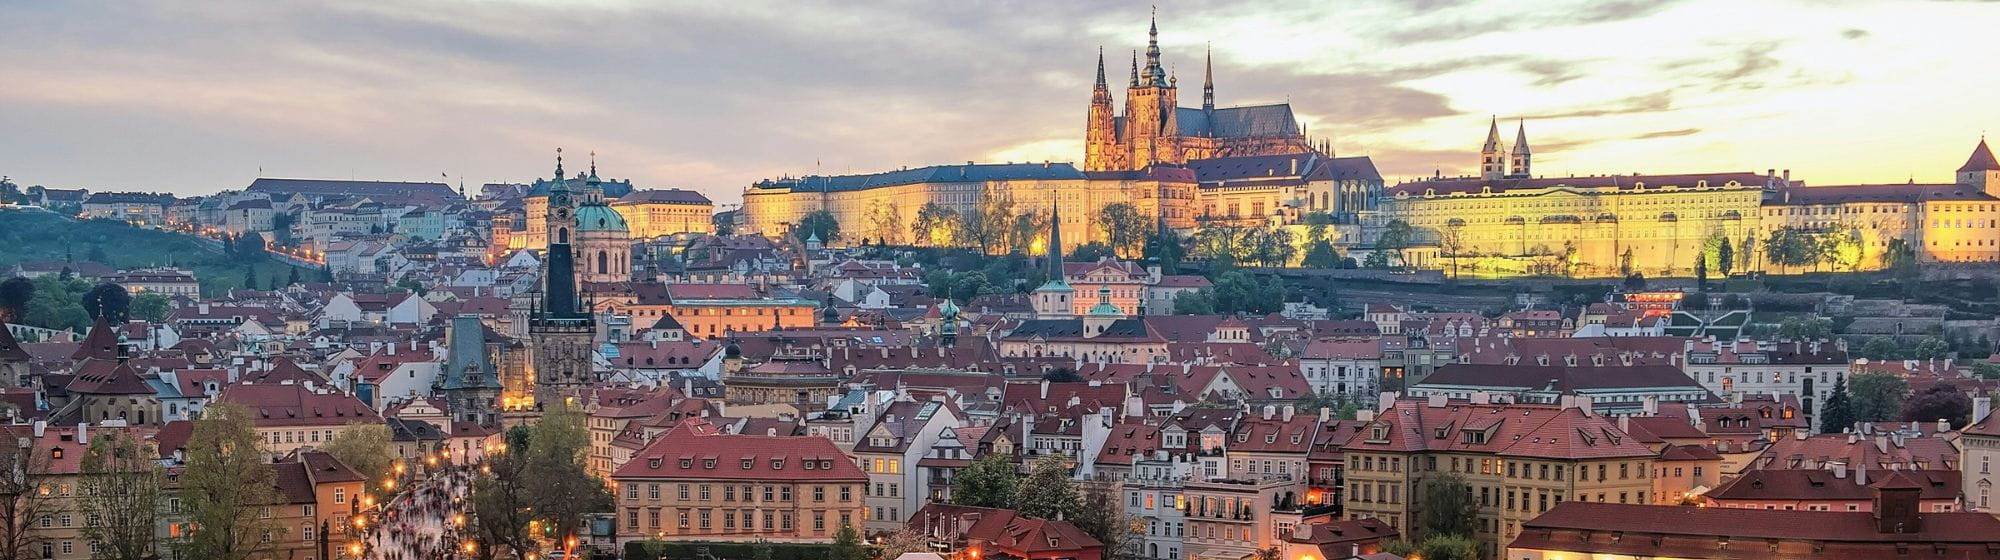 Photo of Prague by William Zhang